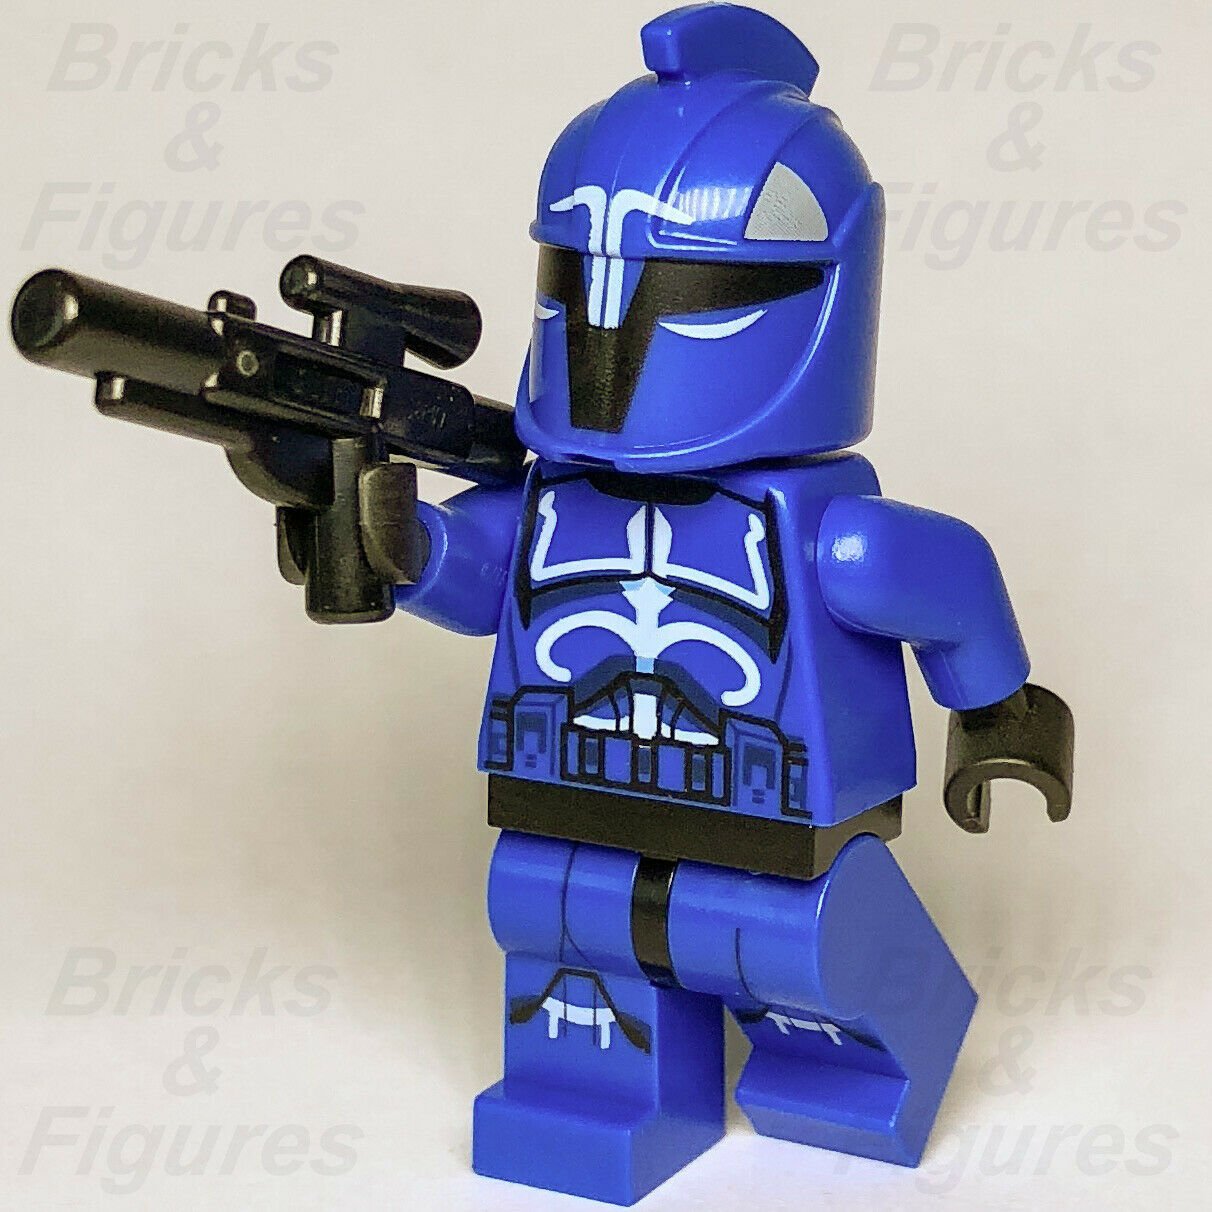 New Star Wars LEGO Senate Commando Captain Clone Wars Trooper Minifigure 75088 - Bricks & Figures